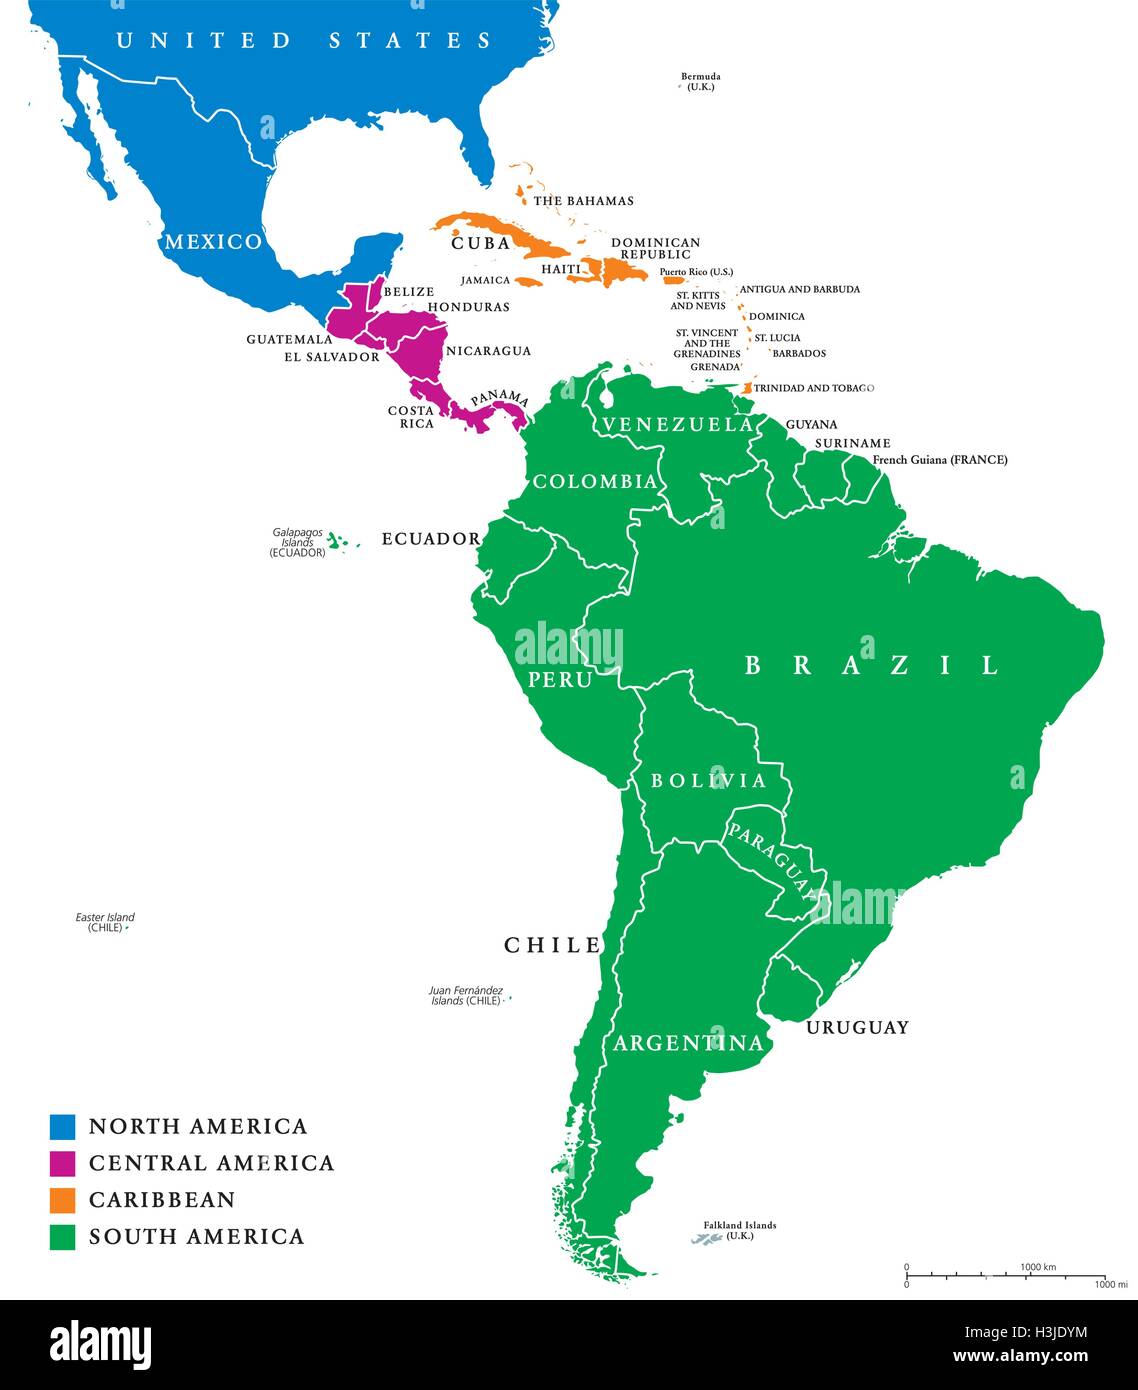 Latin America Regions Political Map The Subregions Caribbean